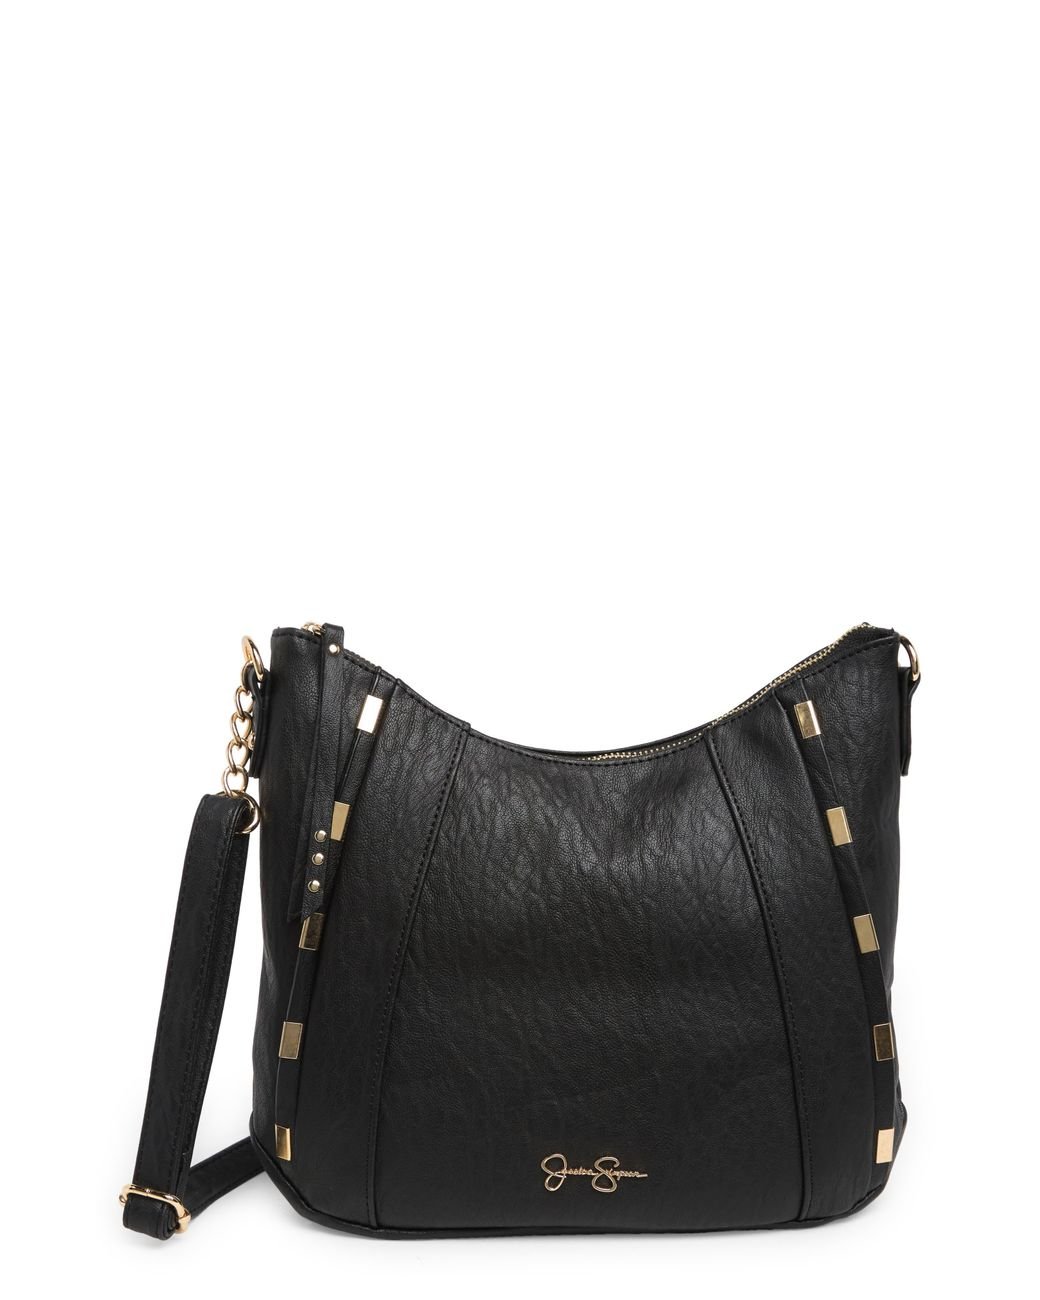 Jessica Simpson Isabelle Crossbody Bag in Black